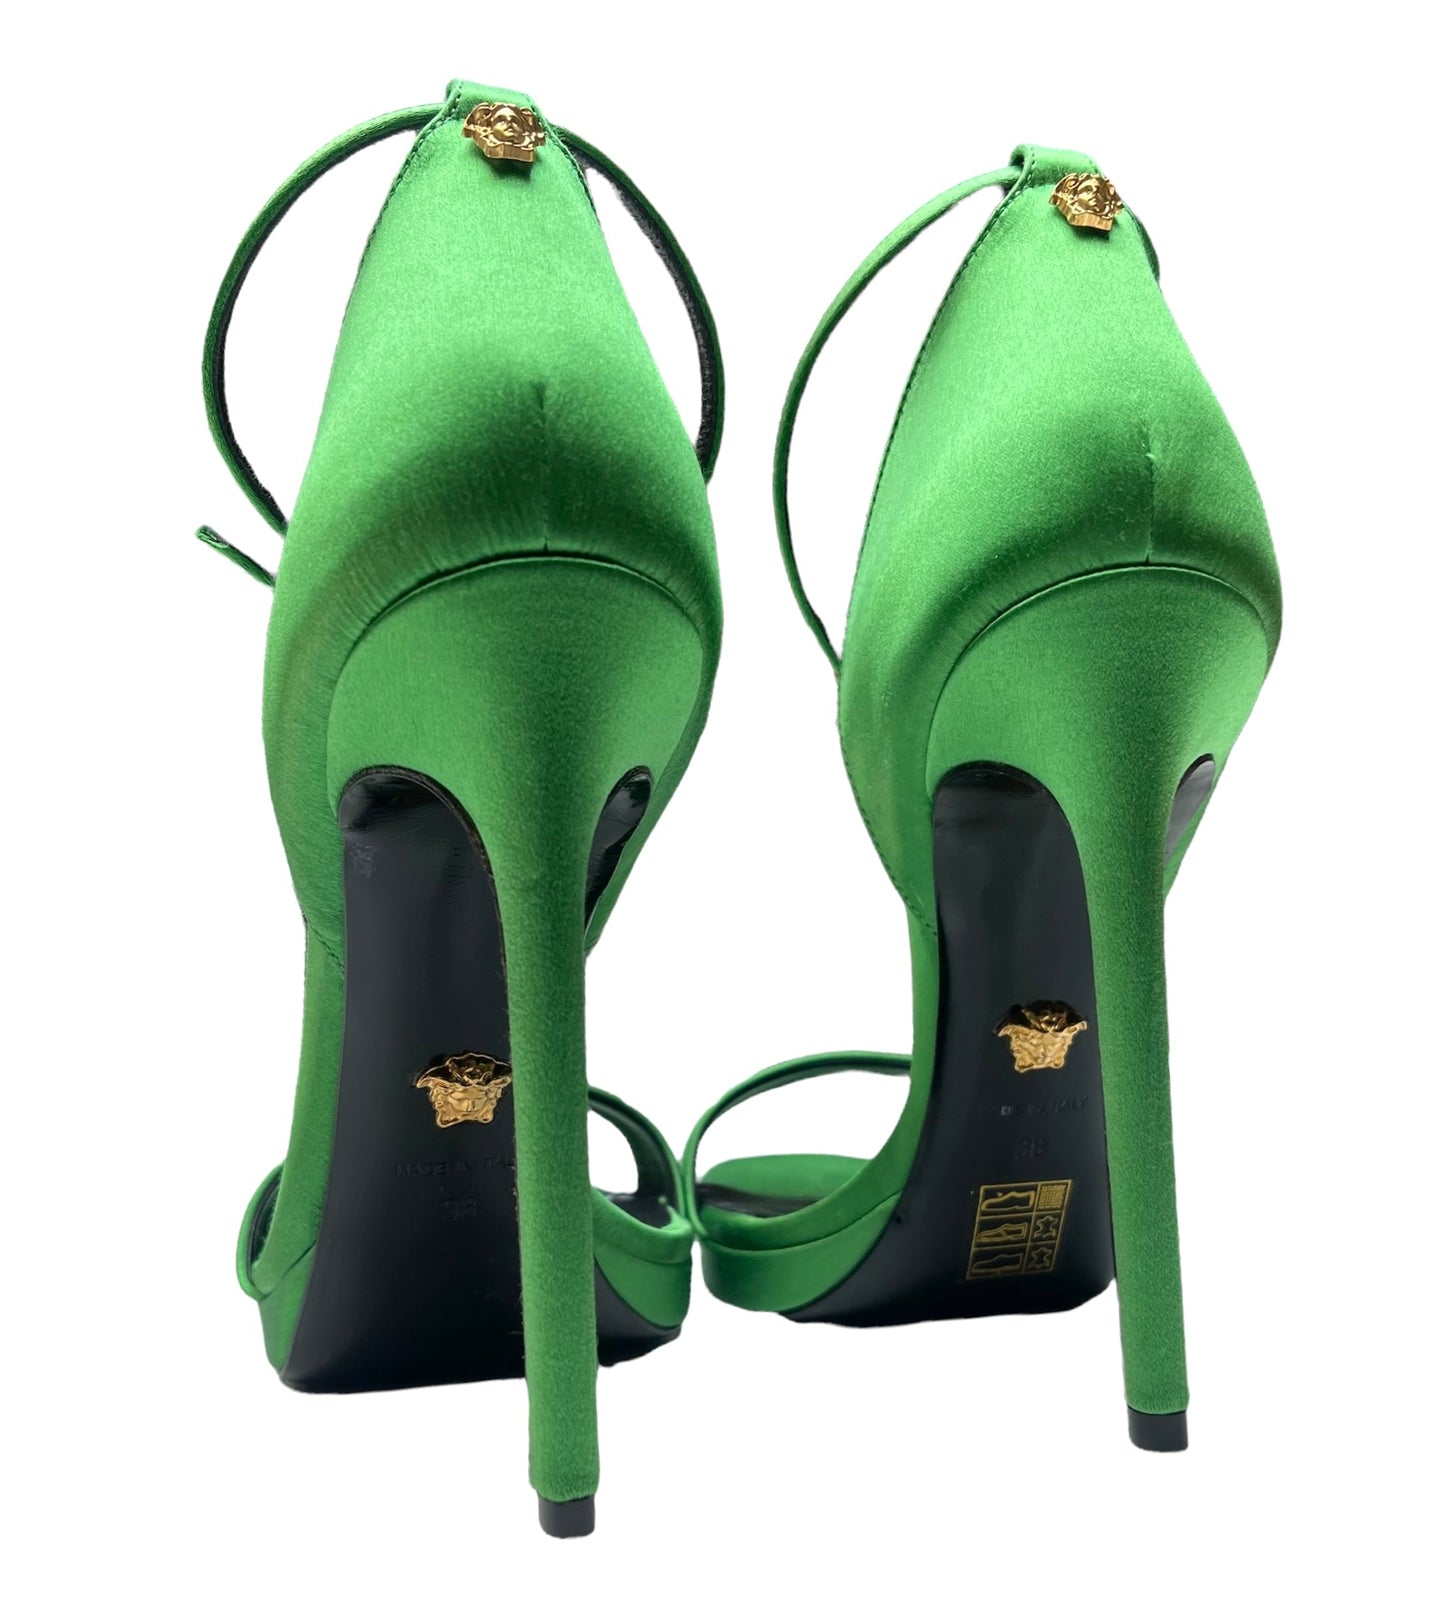 Green Satin High Heels - 9